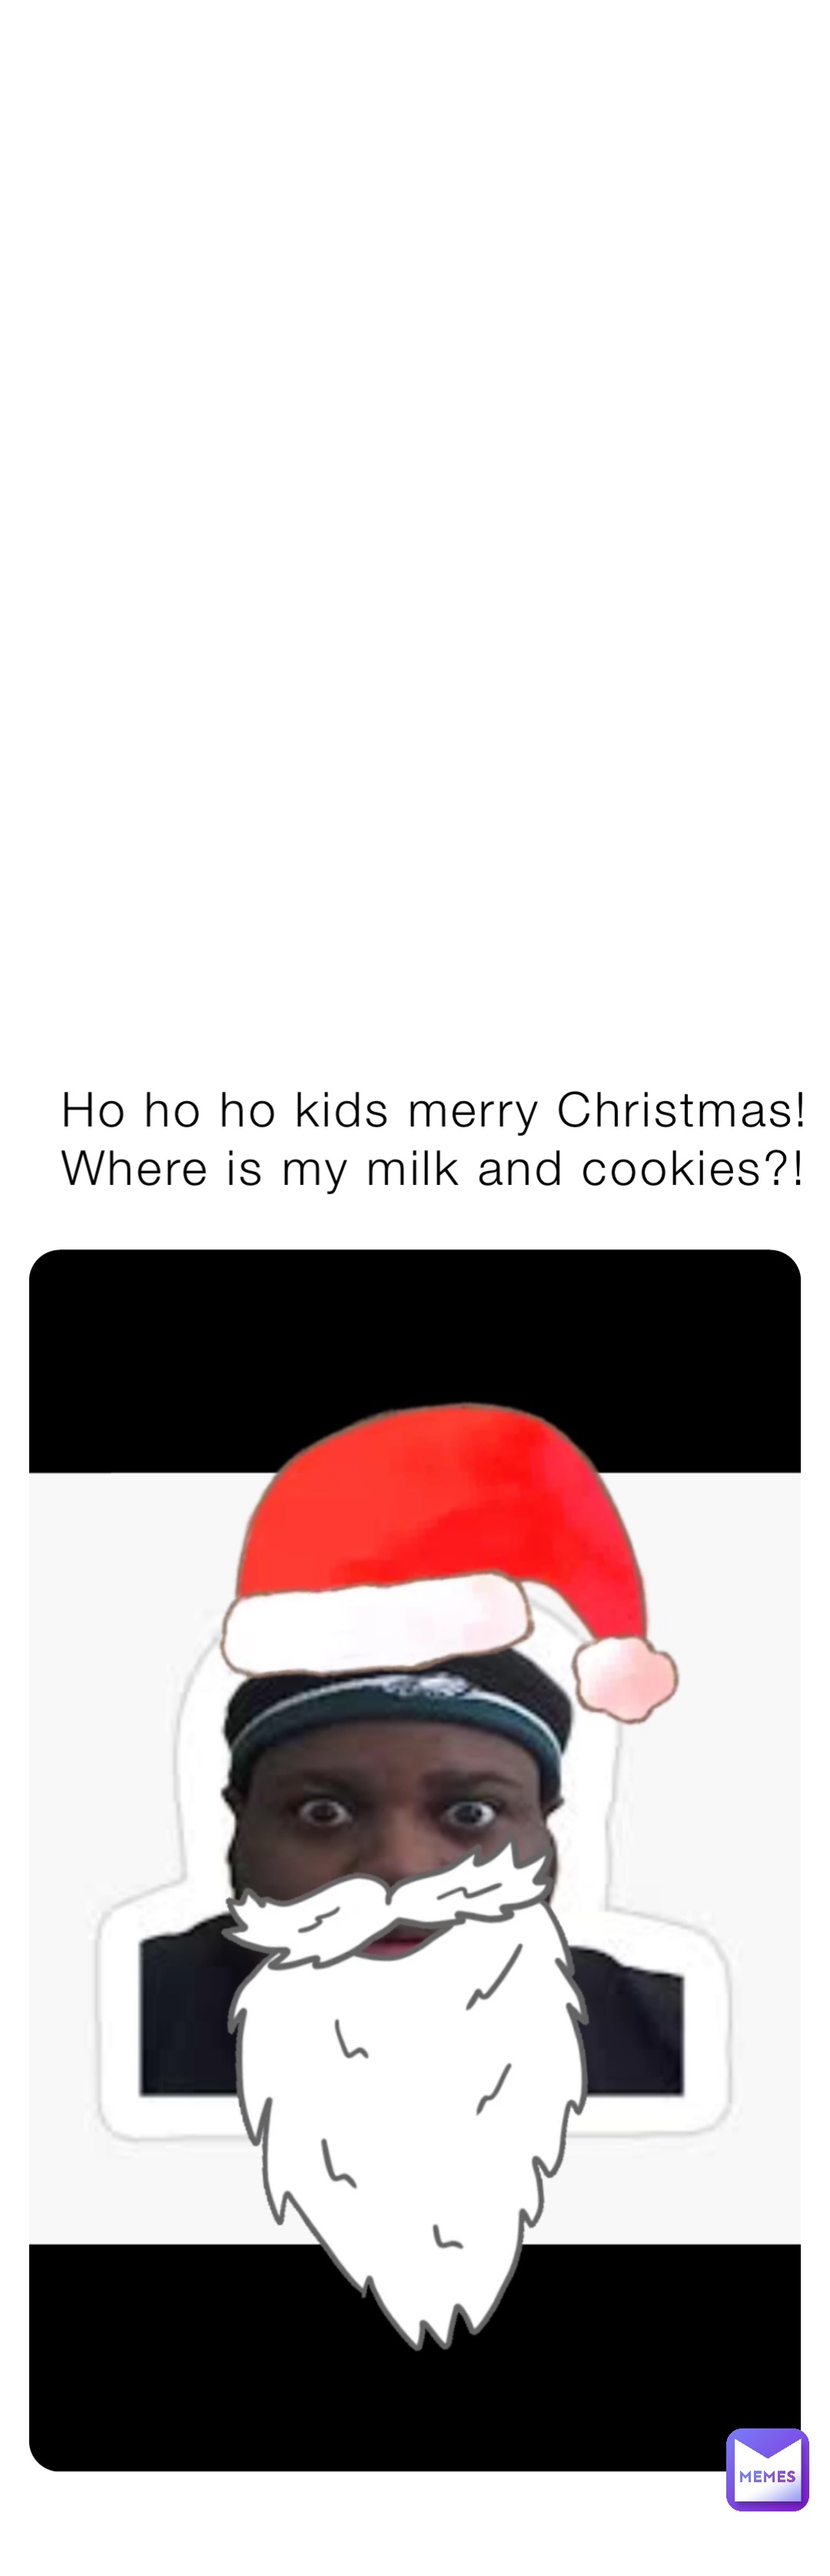 Ho ho ho kids merry Christmas!
Where is my milk and cookies?!